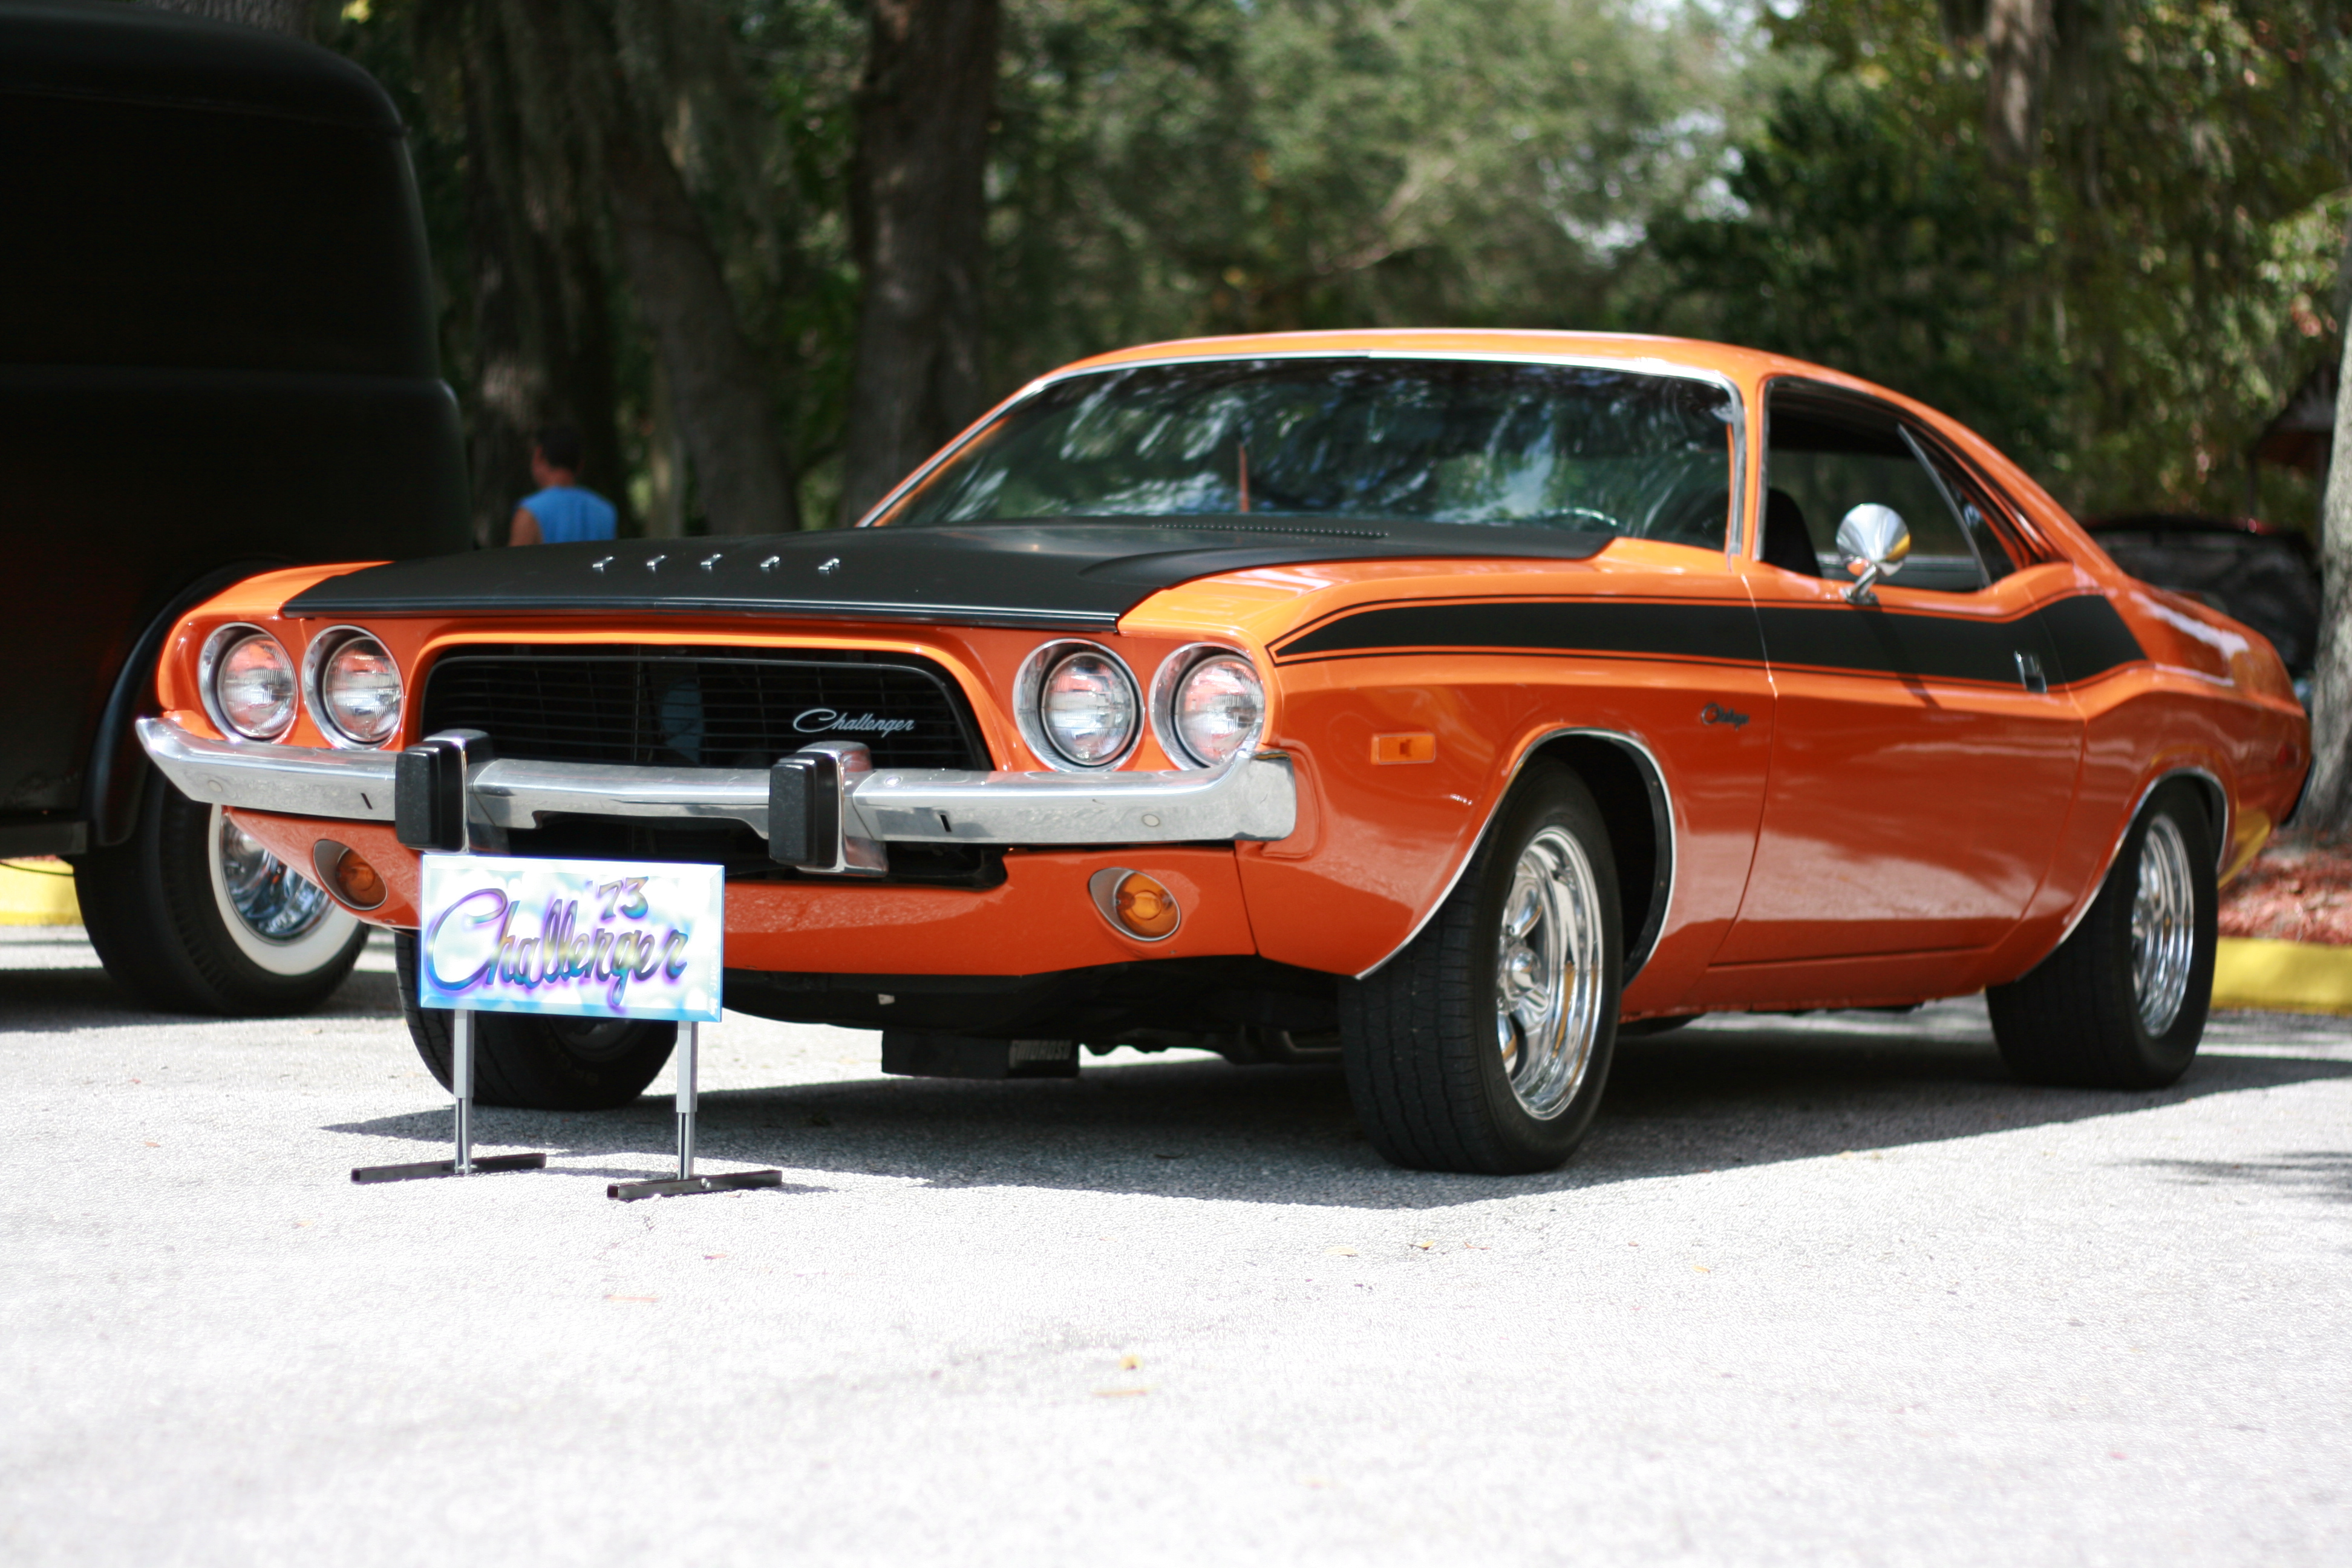 1973 Dodge Chellenger | Flickr - Photo Sharing!